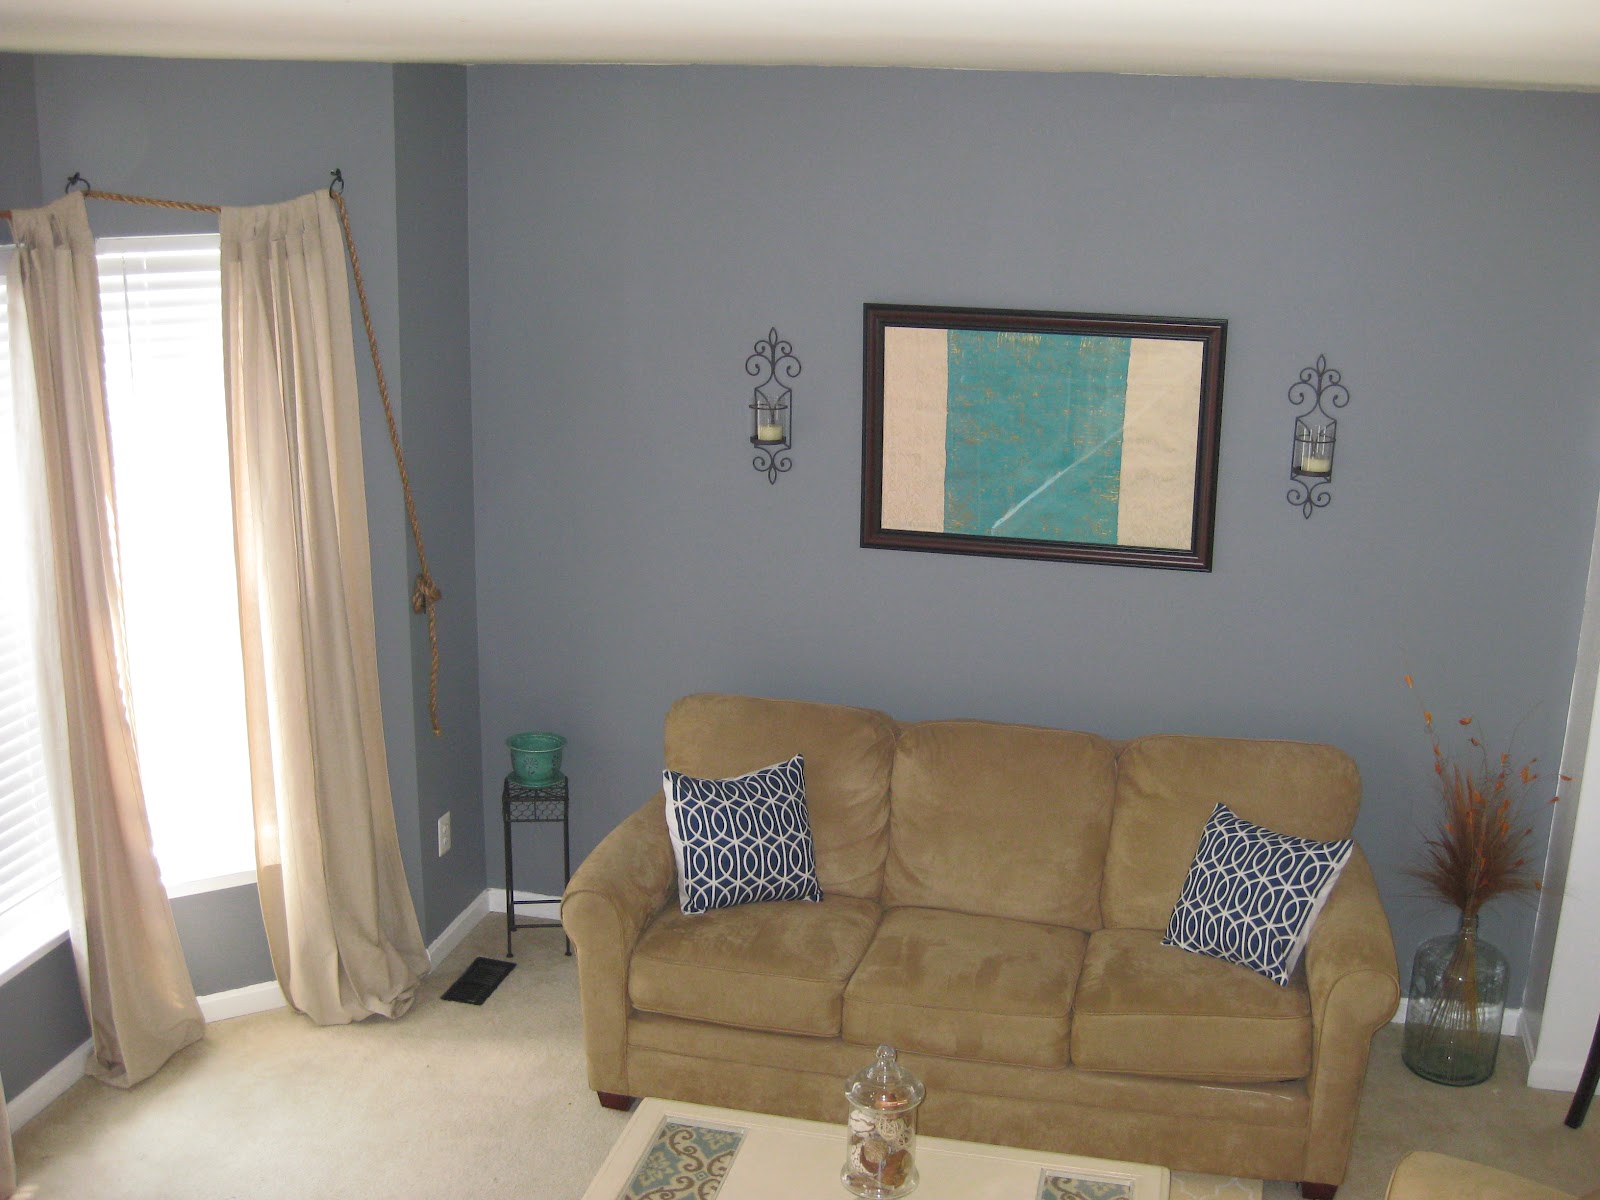 wallpaper borders for living room,room,property,furniture,living room,interior design